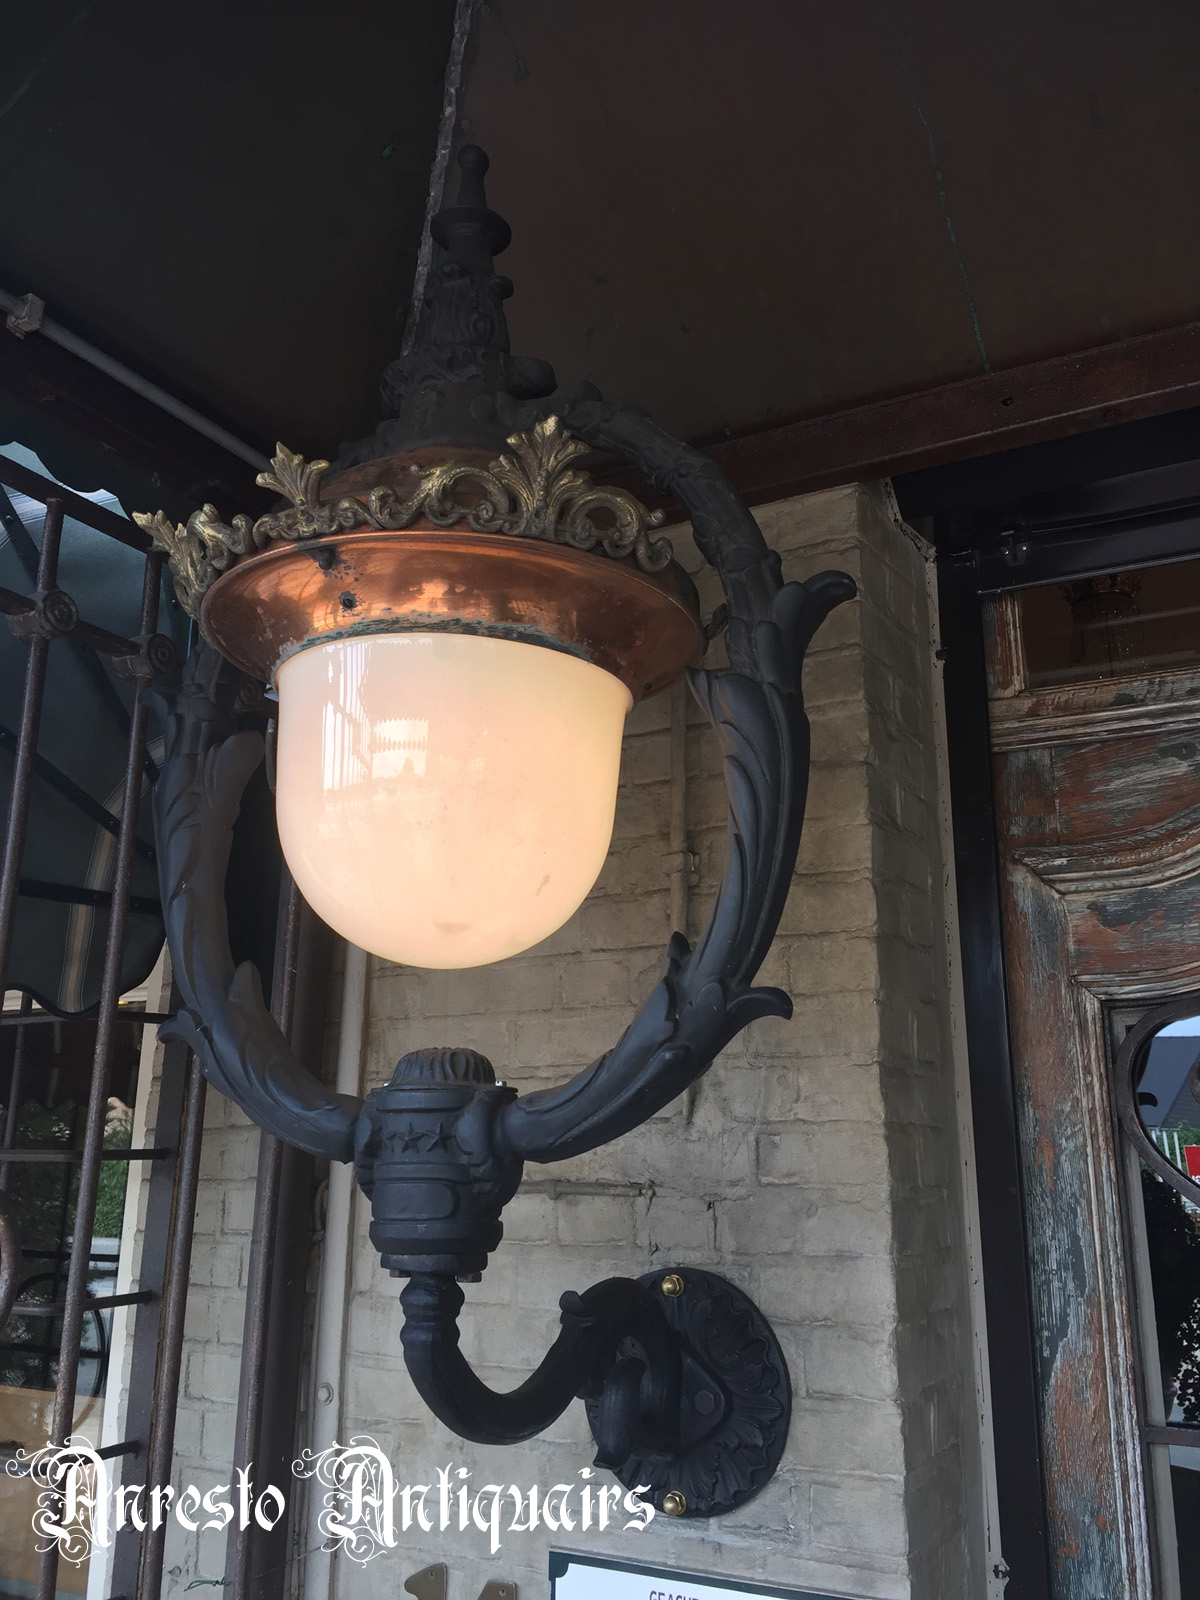 Noord Amerika belangrijk Vlek Antieke Tuinlampen Buitenverlichting Lantaarns: ANRESTO Antiek  tuinverlichting, Lantaarnpalen buitenlampen antieke lantaarns